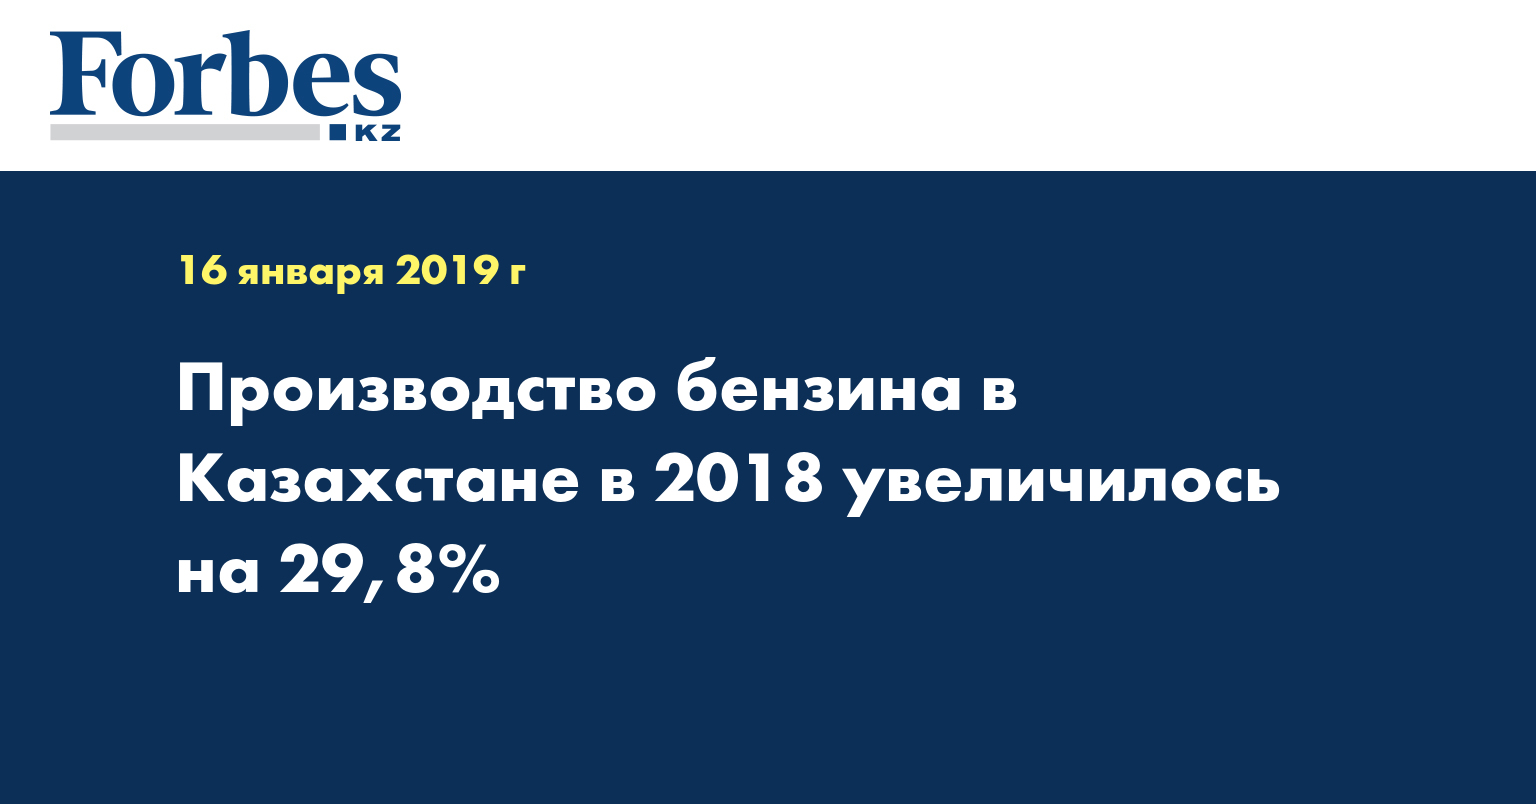 Производство бензина в Казахстане в 2018 увеличилось на 29,8%